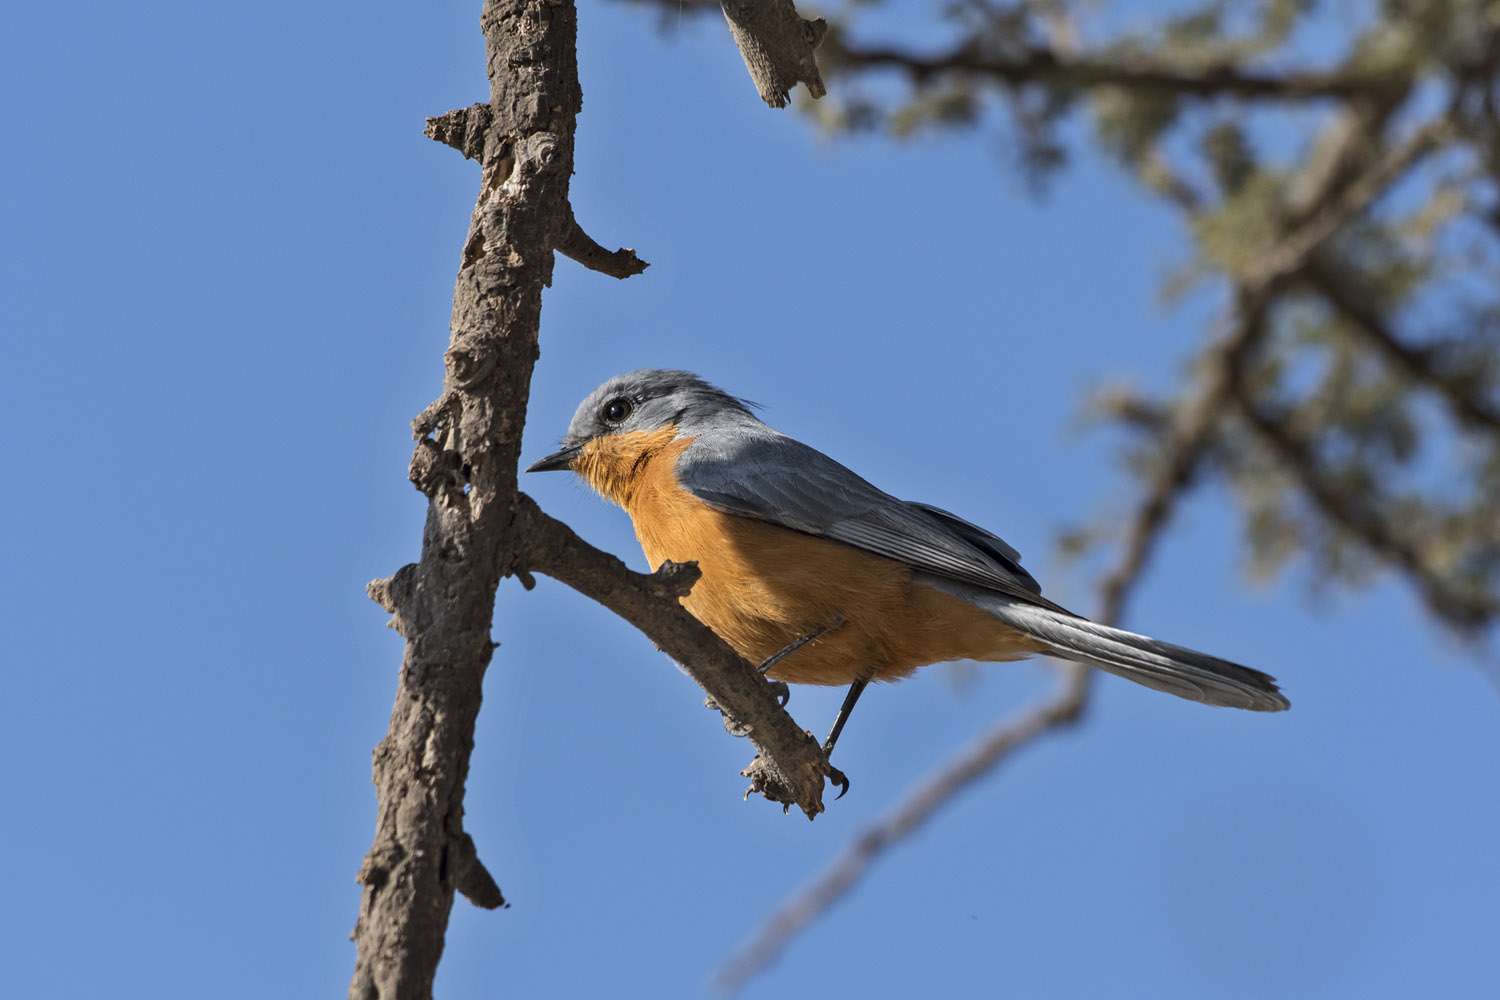 Silverbird, Serengeti NP